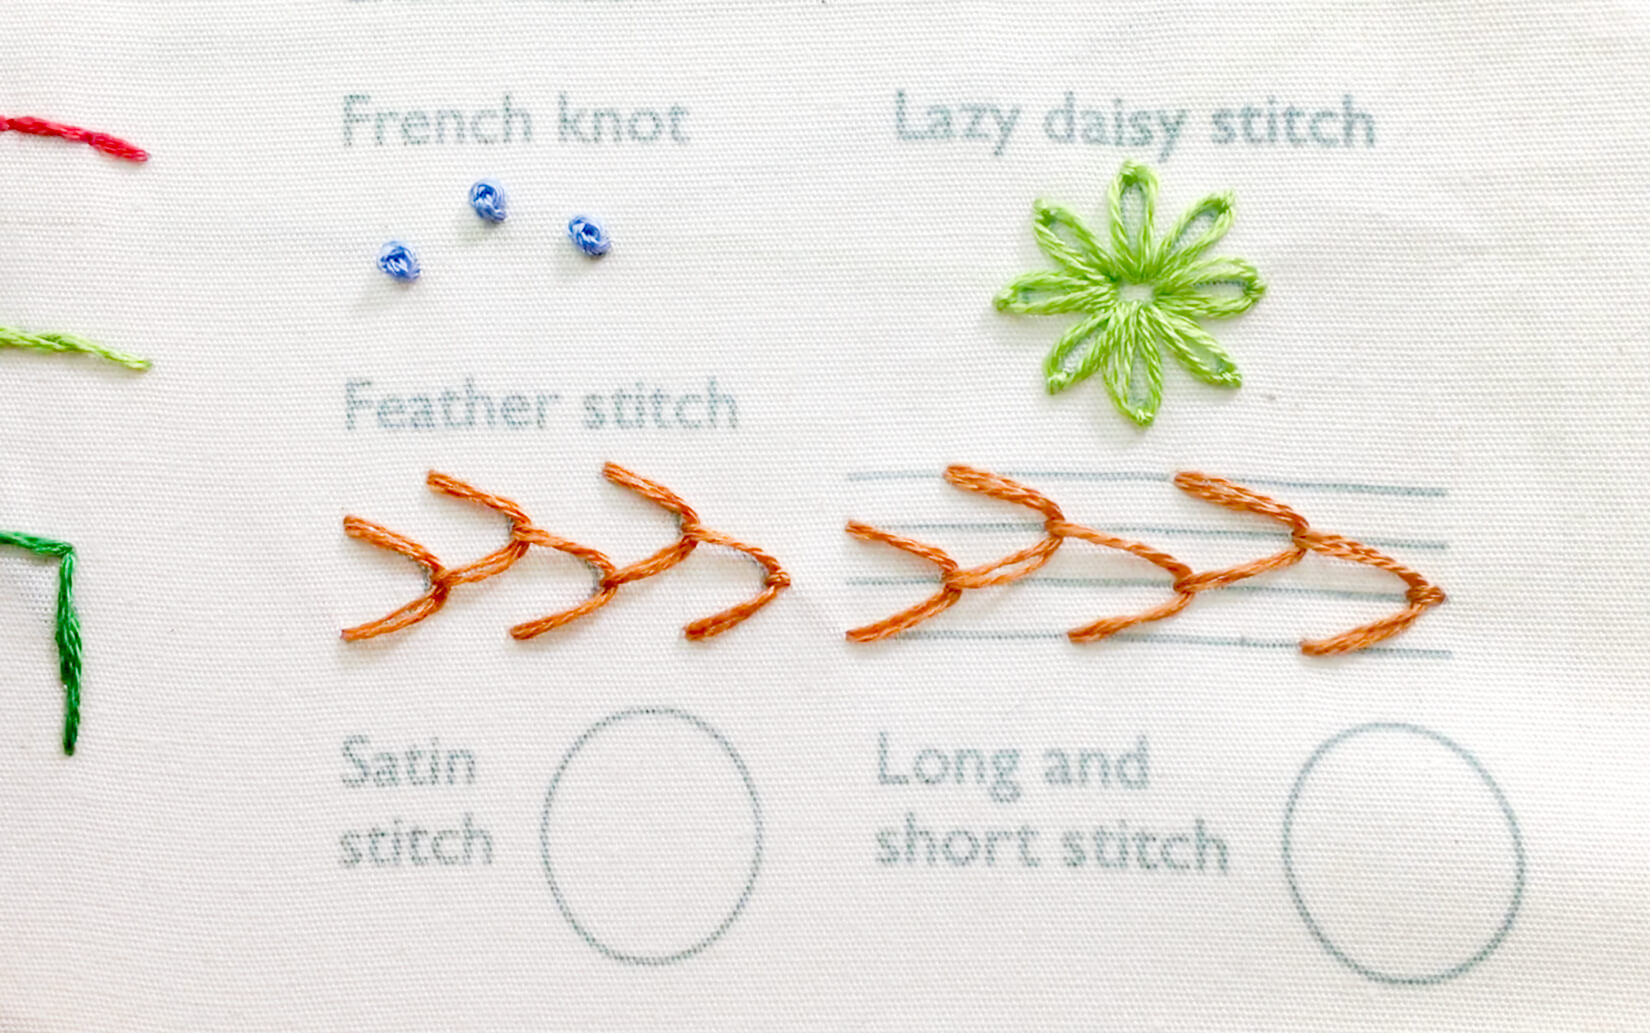 Image of stitching the feather stitch